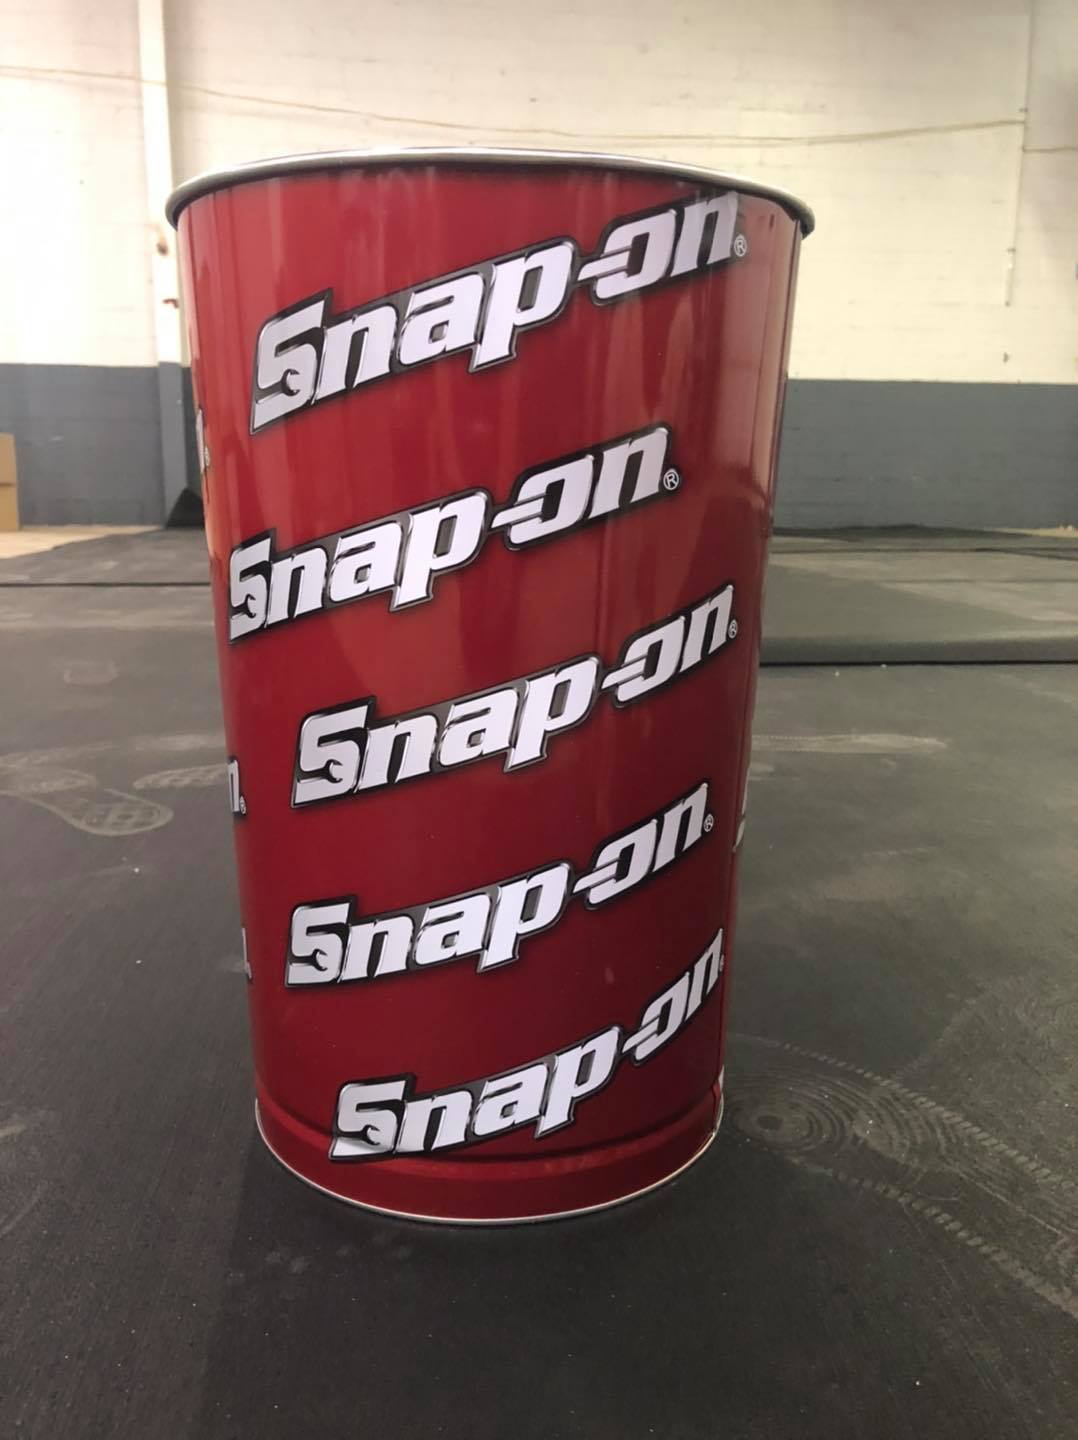 Snap On Tools brand logo vintage steel trash can for garage, work